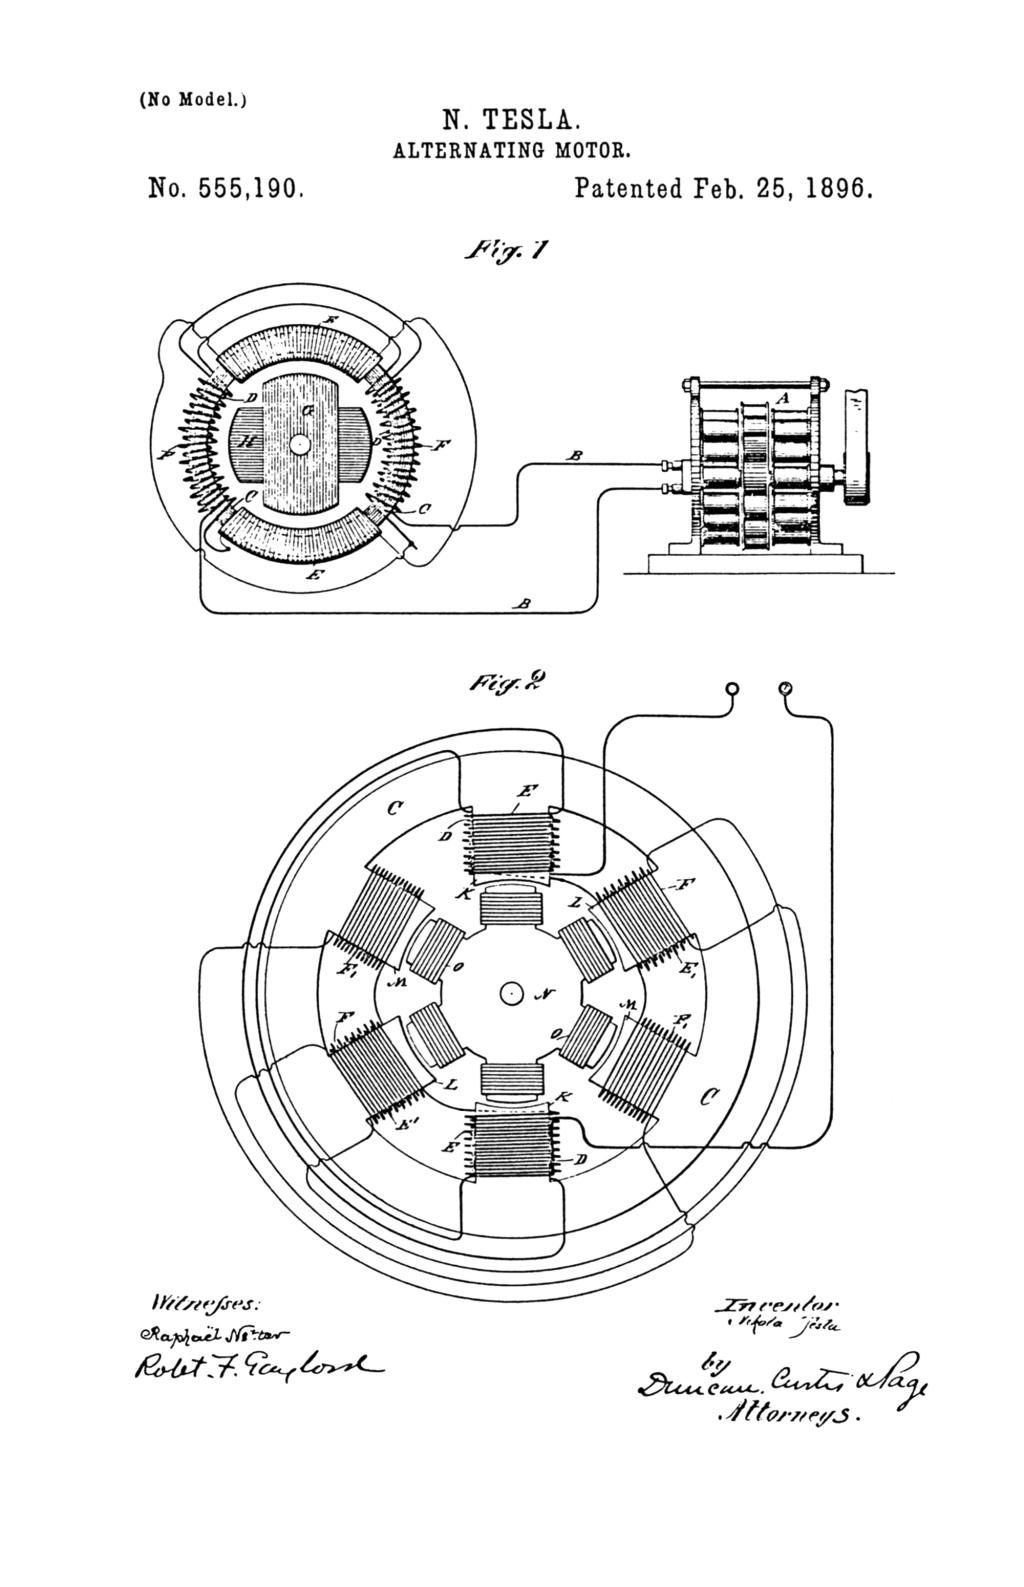 Nikola Tesla U.S. Patent 555,190 - Alternating Motor - Image 1